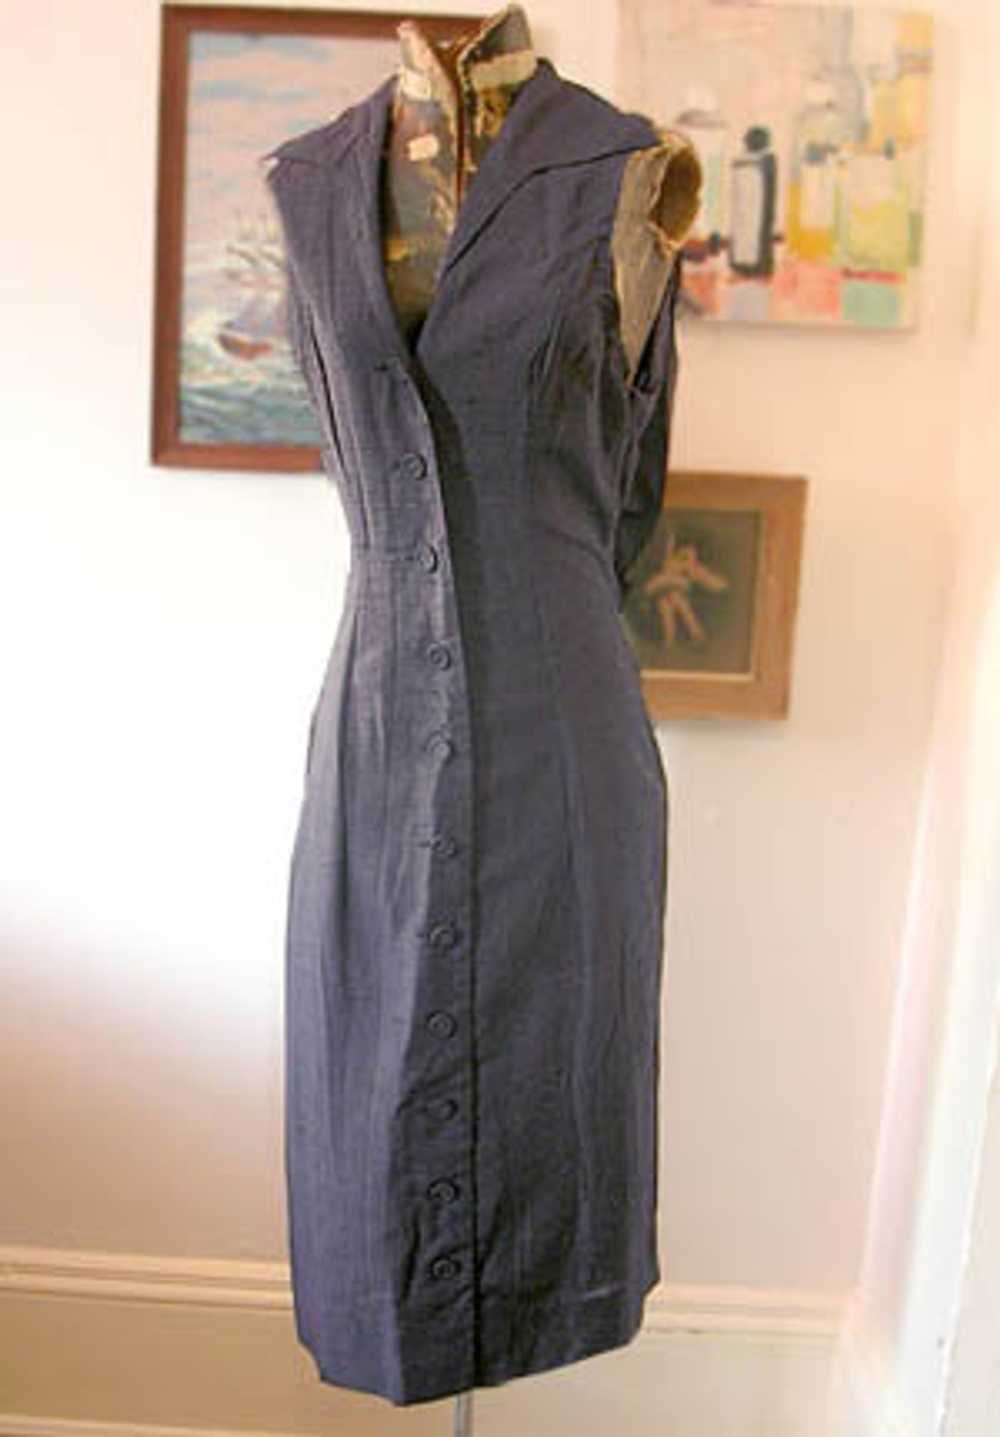 Balenciaga-inspired sack dress - image 3